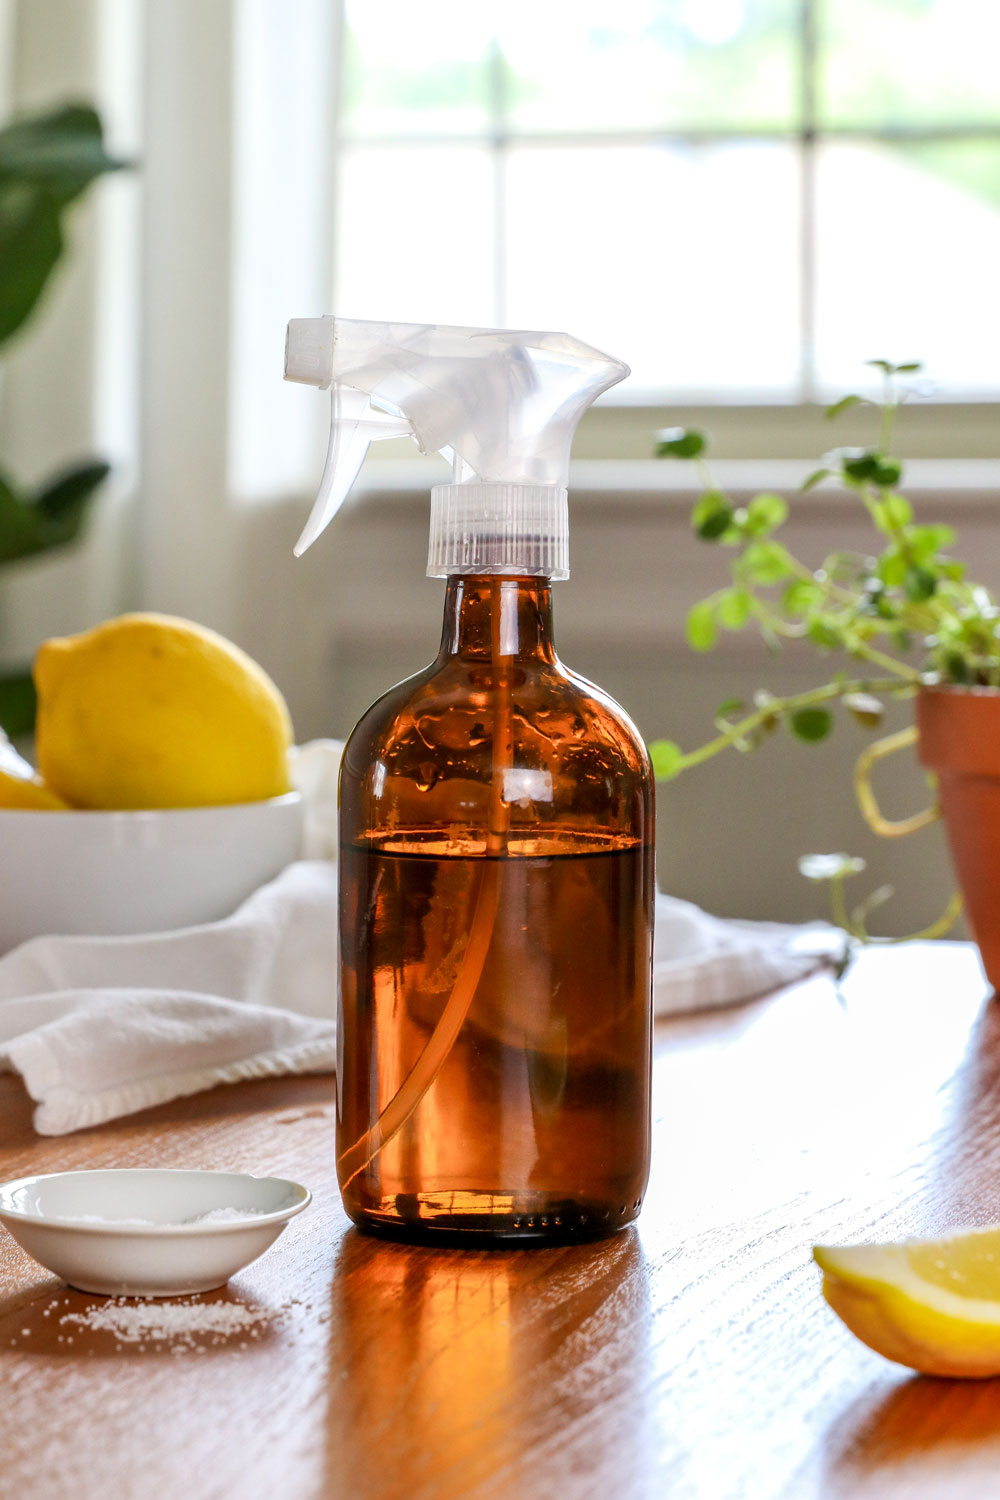 Homemade vinegar spray to get rid of ants